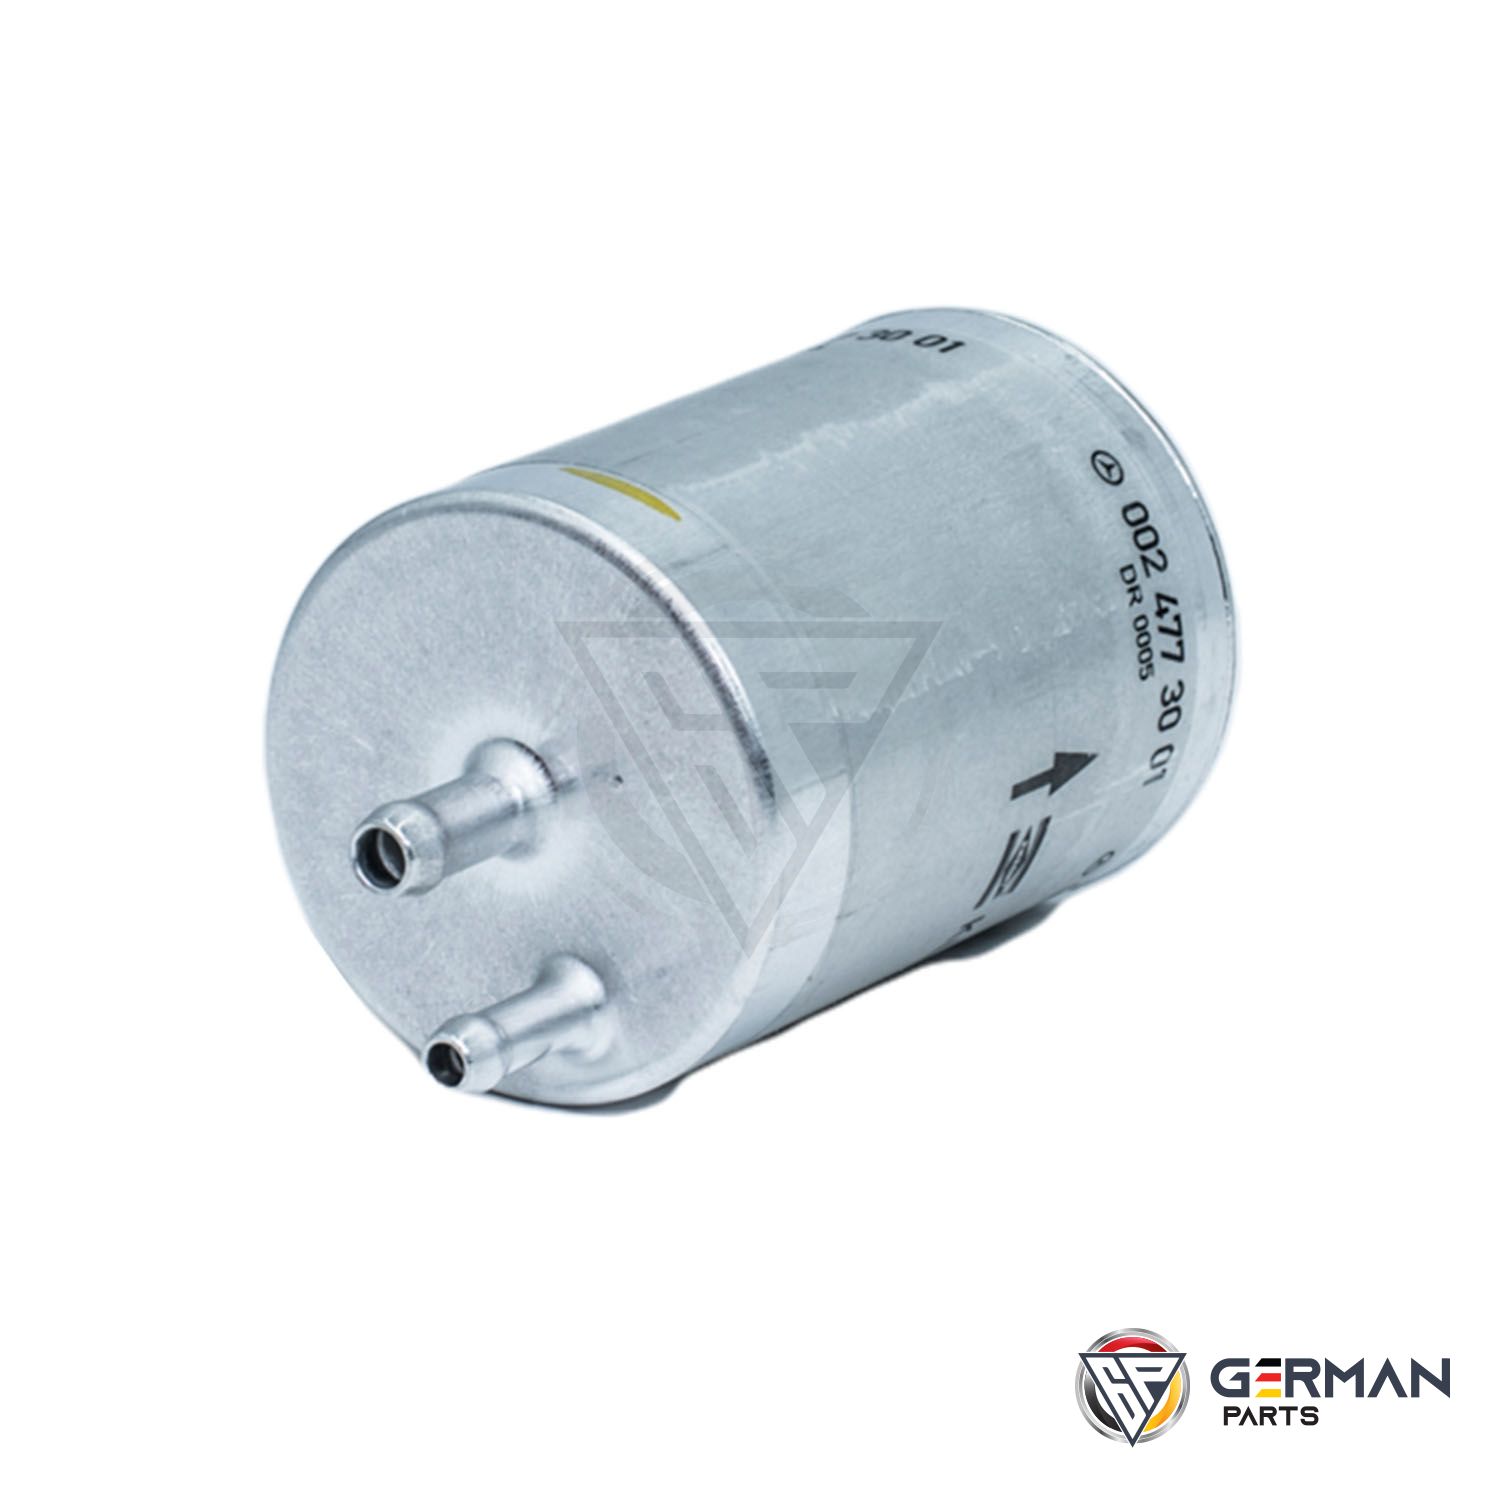 Buy Mercedes Benz Fuel Filter 0024773001 - German Parts